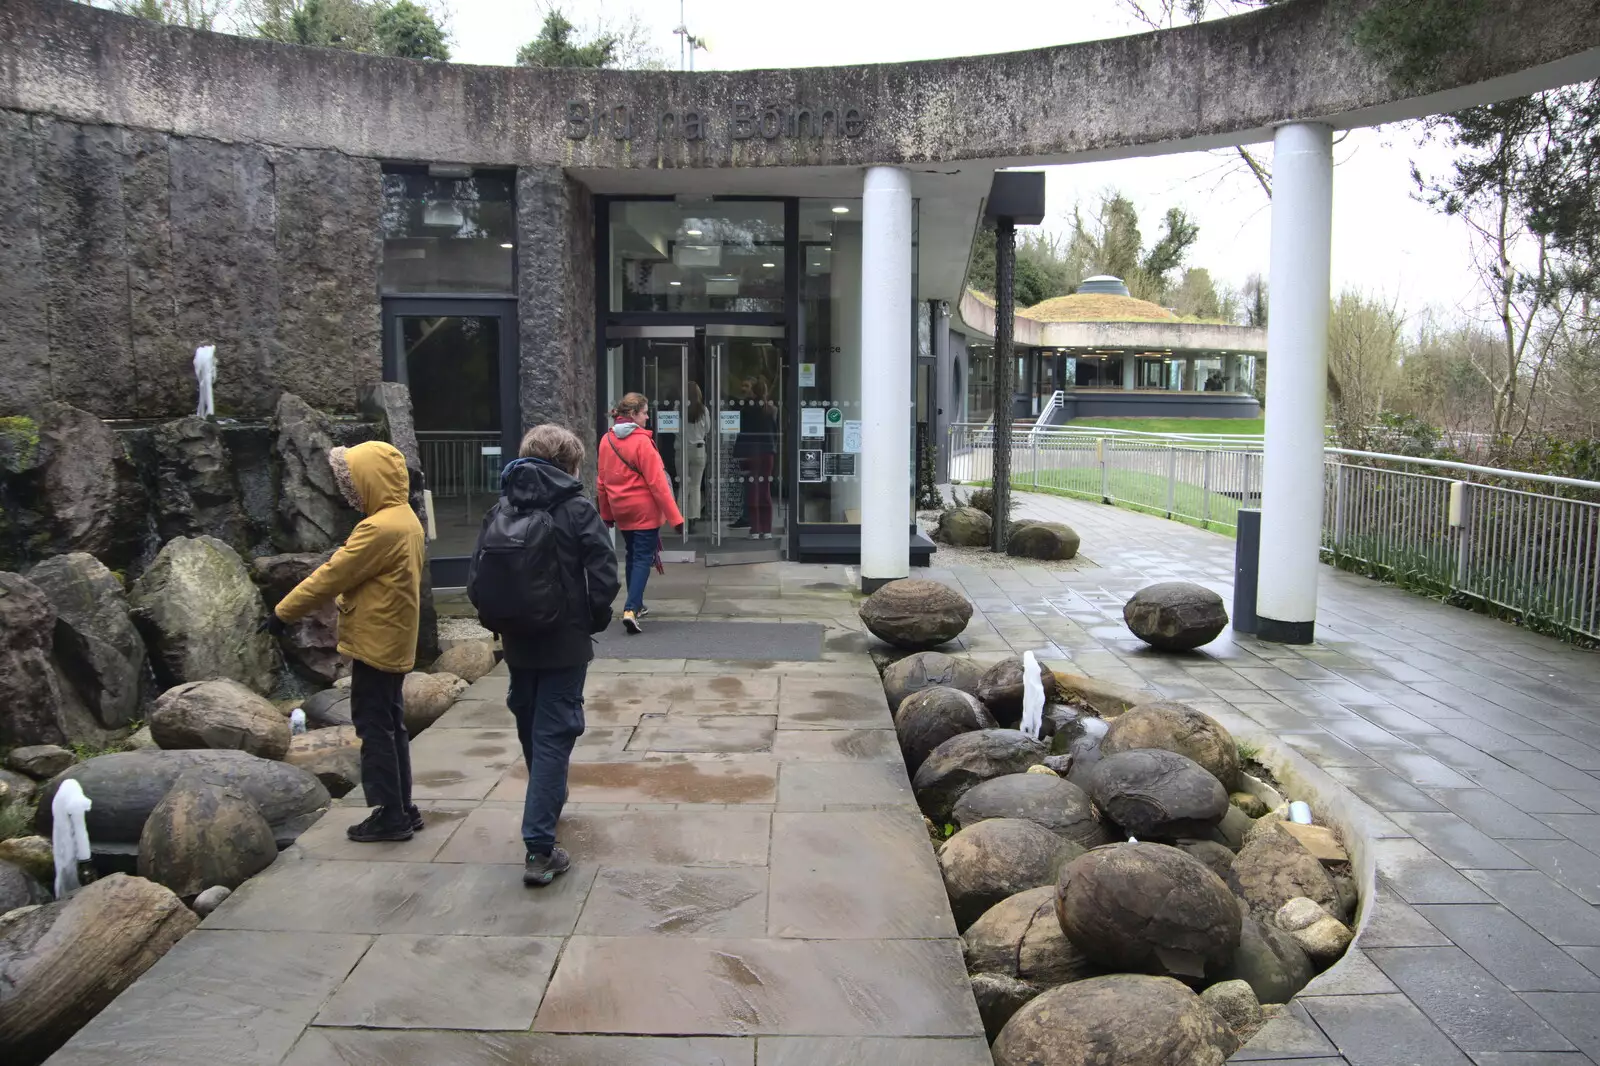 We head into Newgrange visitors' centre, from Blackrock North and Newgrange, County Louth, Ireland - 16th February 2023